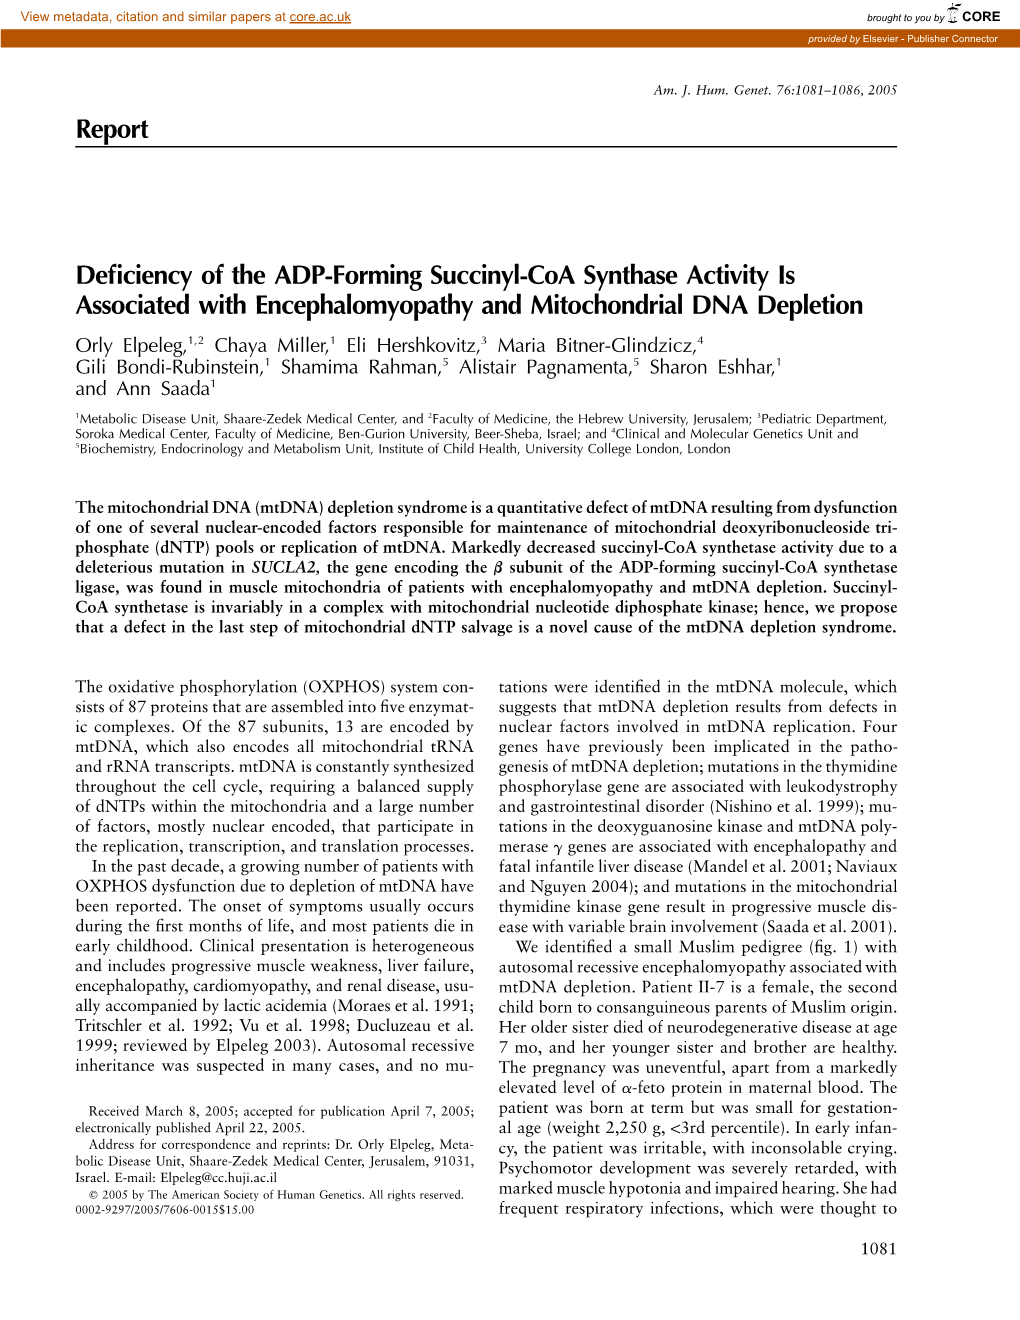 Report Deficiency of the ADP-Forming Succinyl-Coa